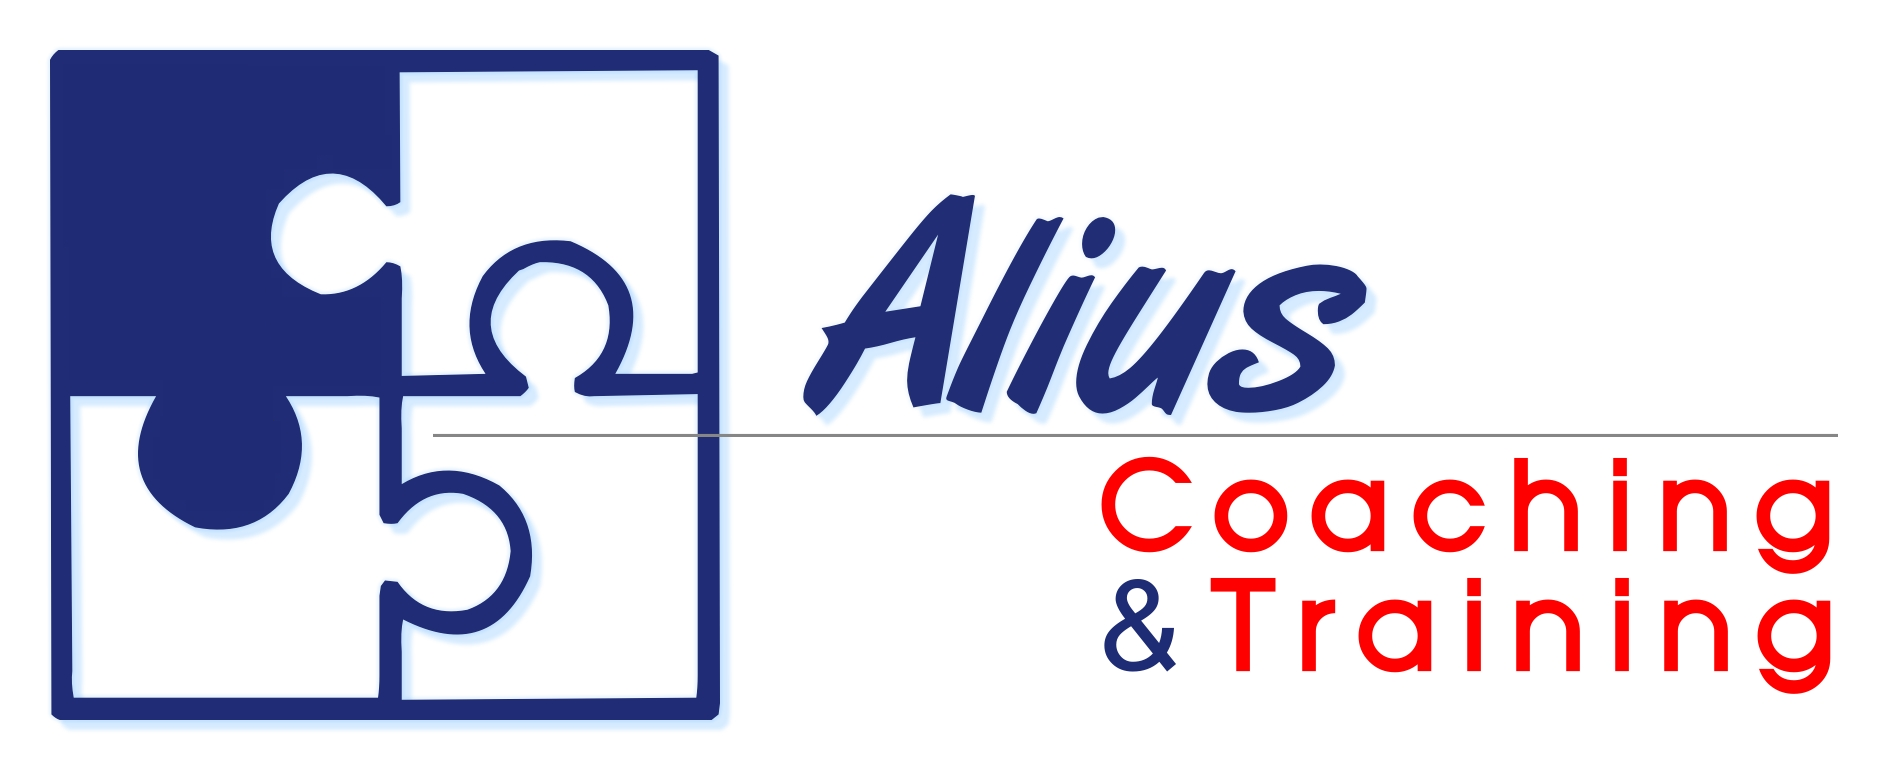 Contact | Alius Coaching & Training